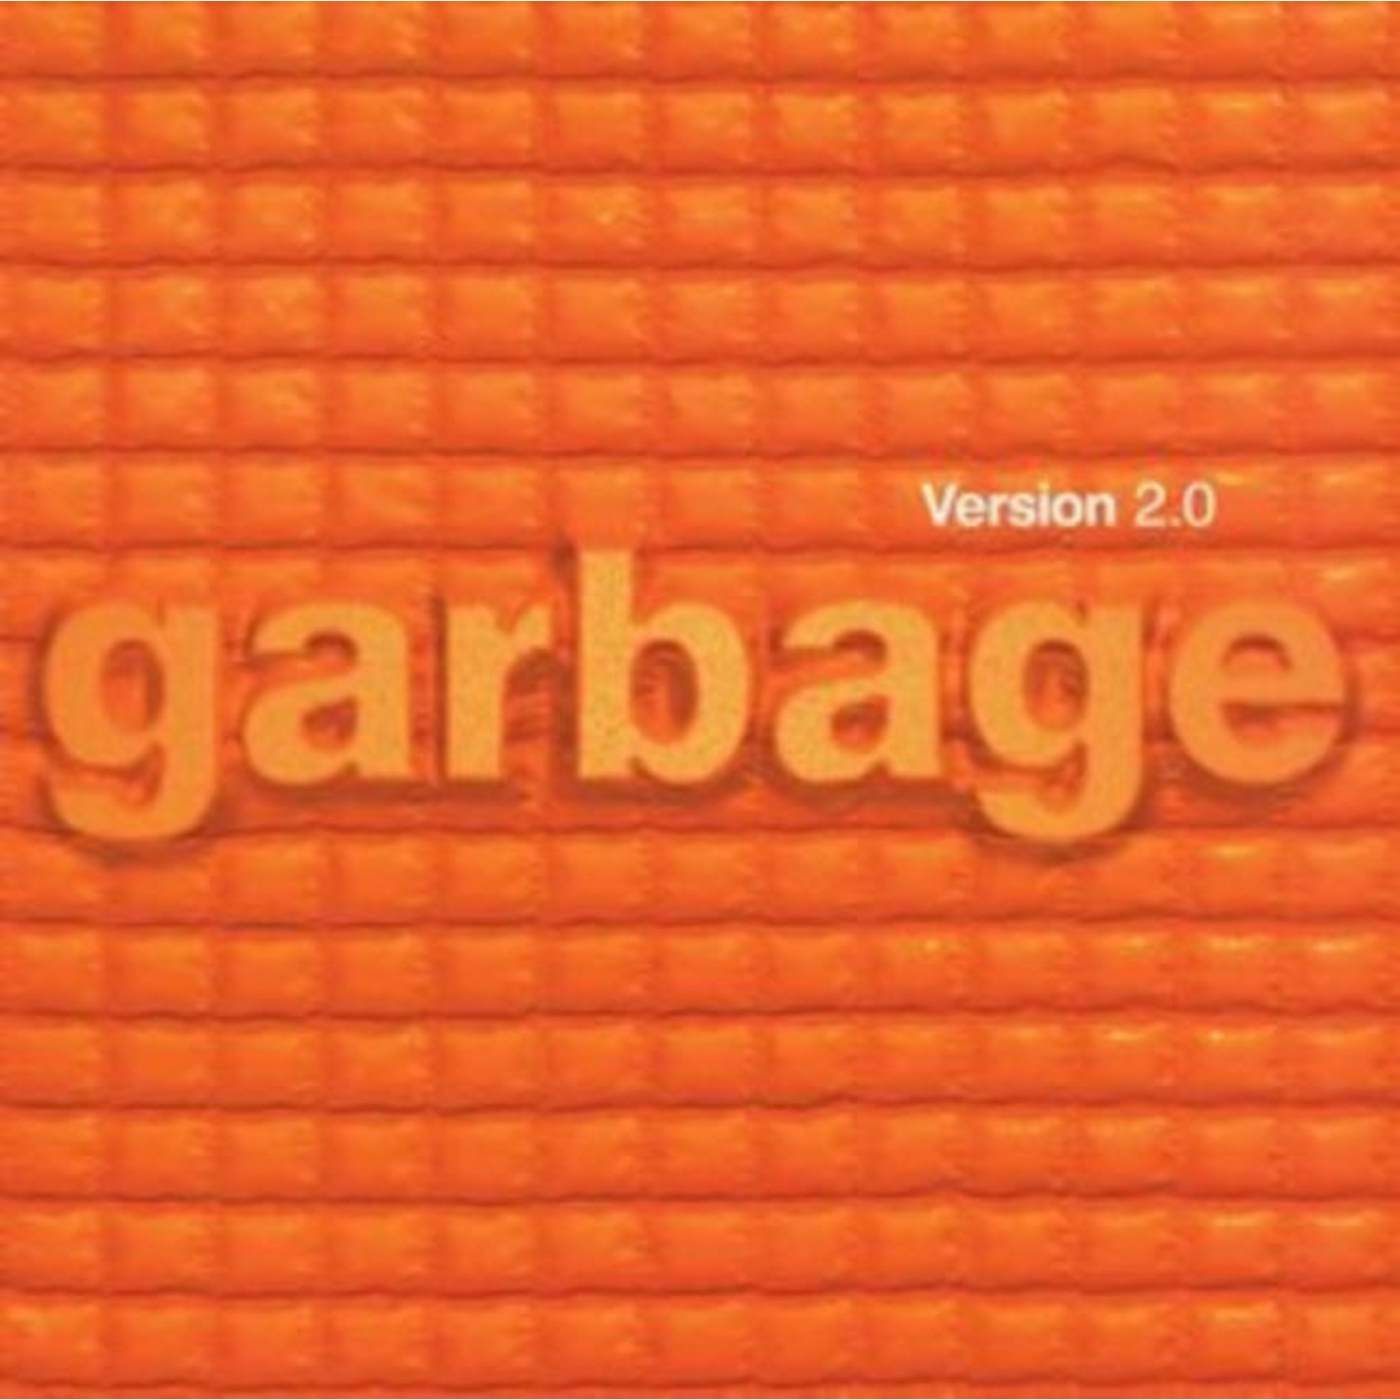 Garbage LP Vinyl Record - Version 20 (Remastered Edition)